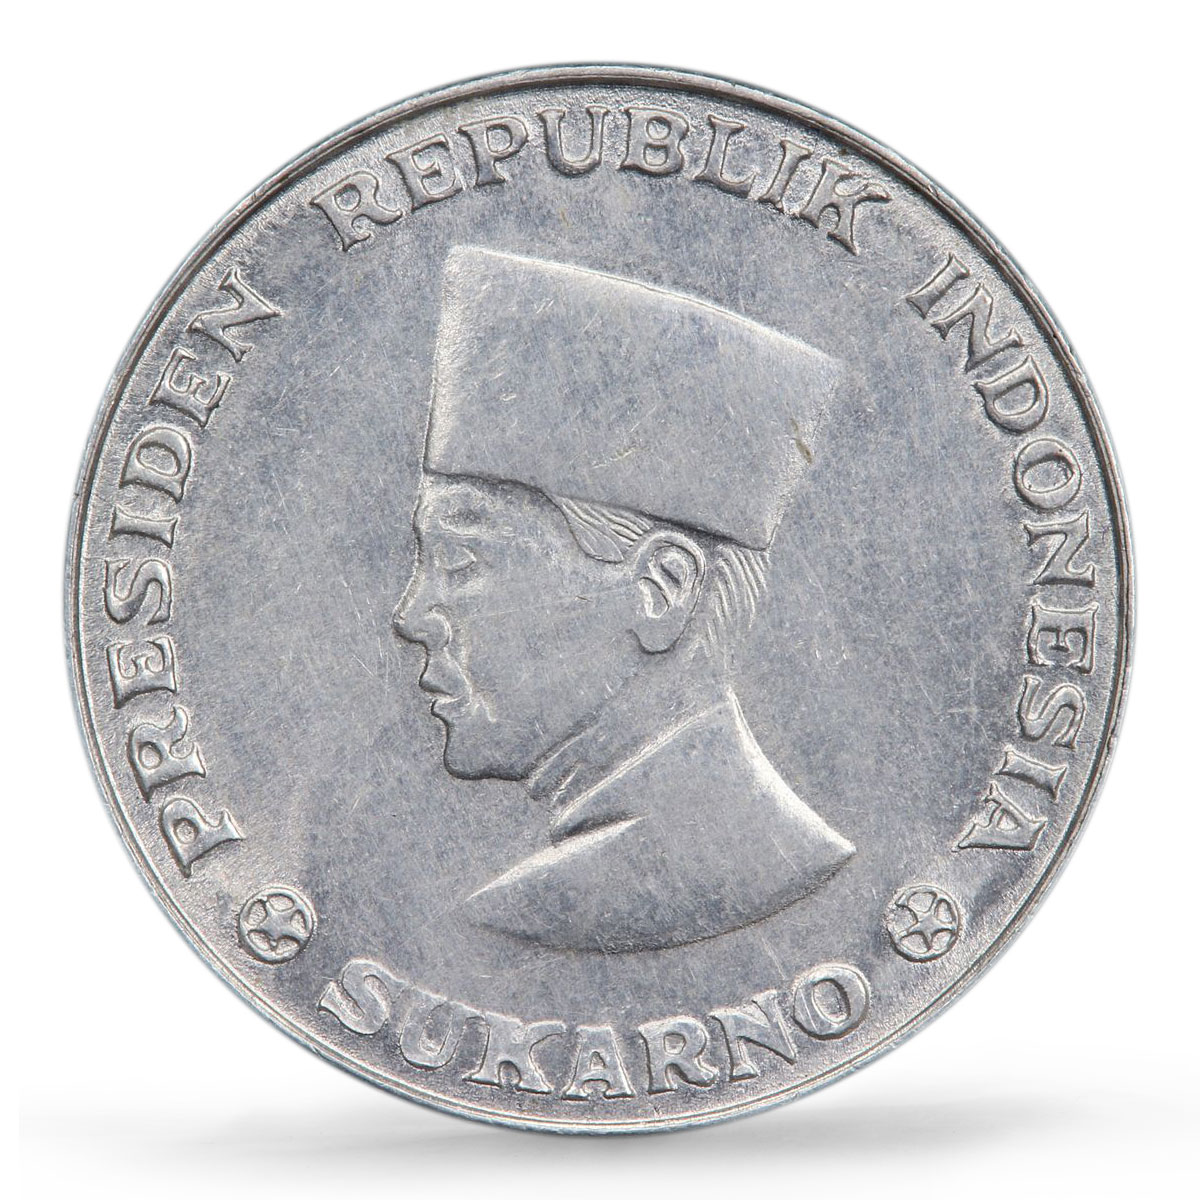 Indonesia Irian Barat 50 sen President Sukarno Km-Pn4 SP62 PCGS Al coin 1965